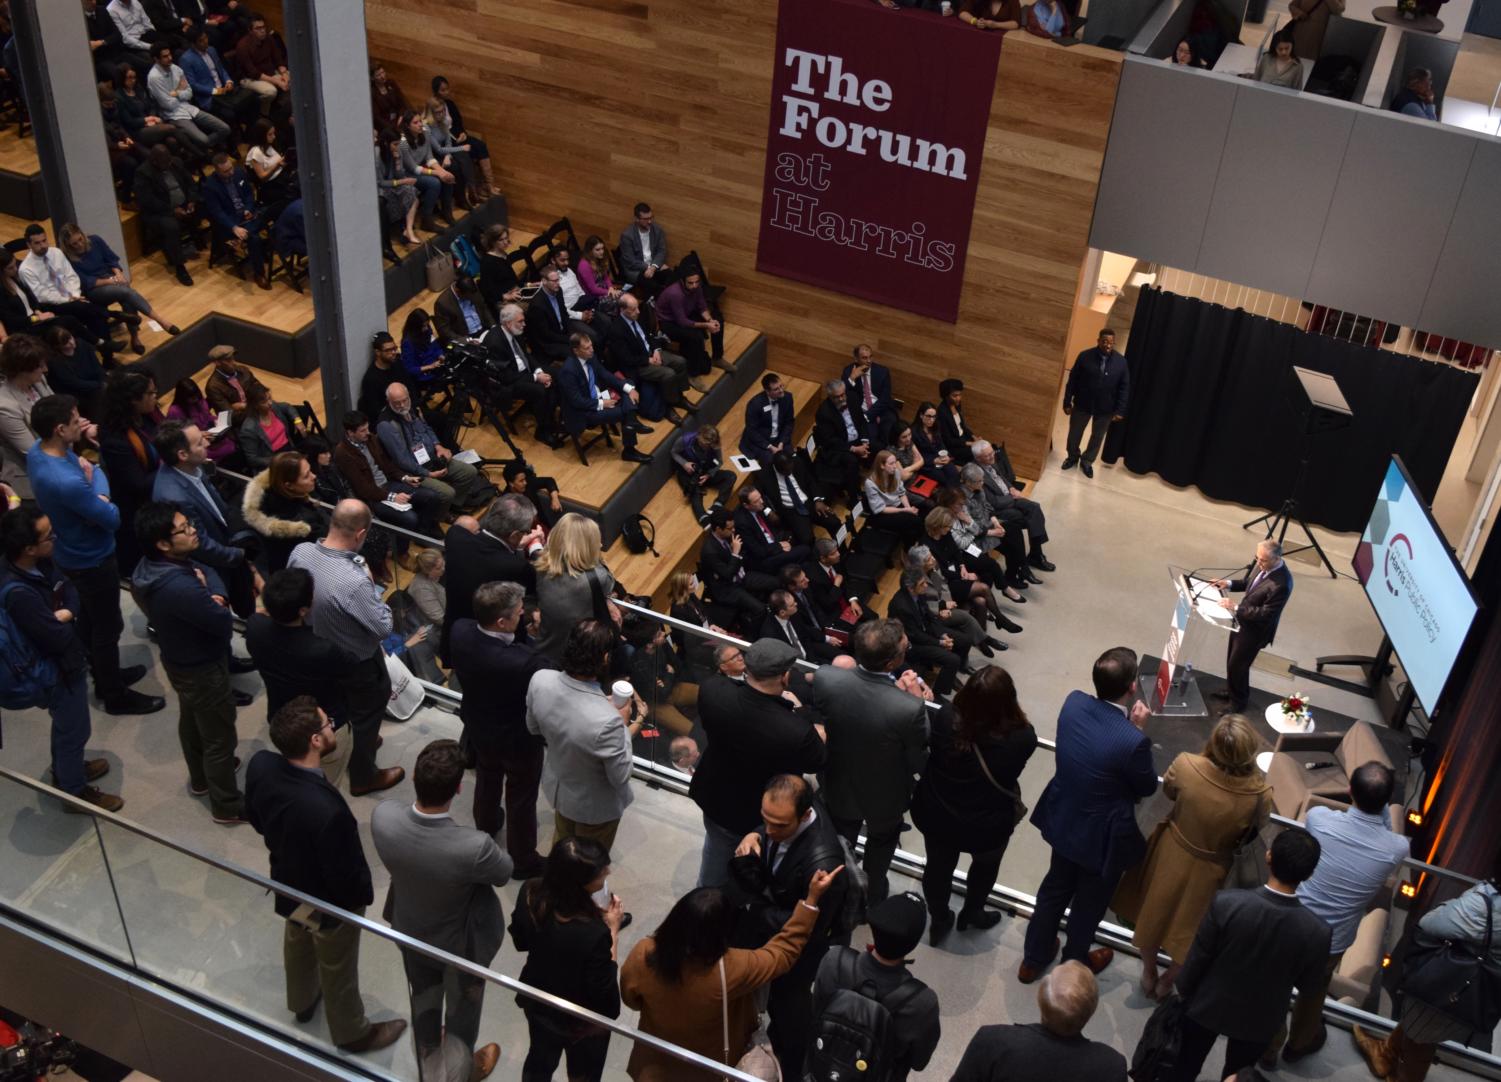 University of Chicago President Robert Zimmer speaks at the grand opening celebration in the new Forum space at the Keller Center